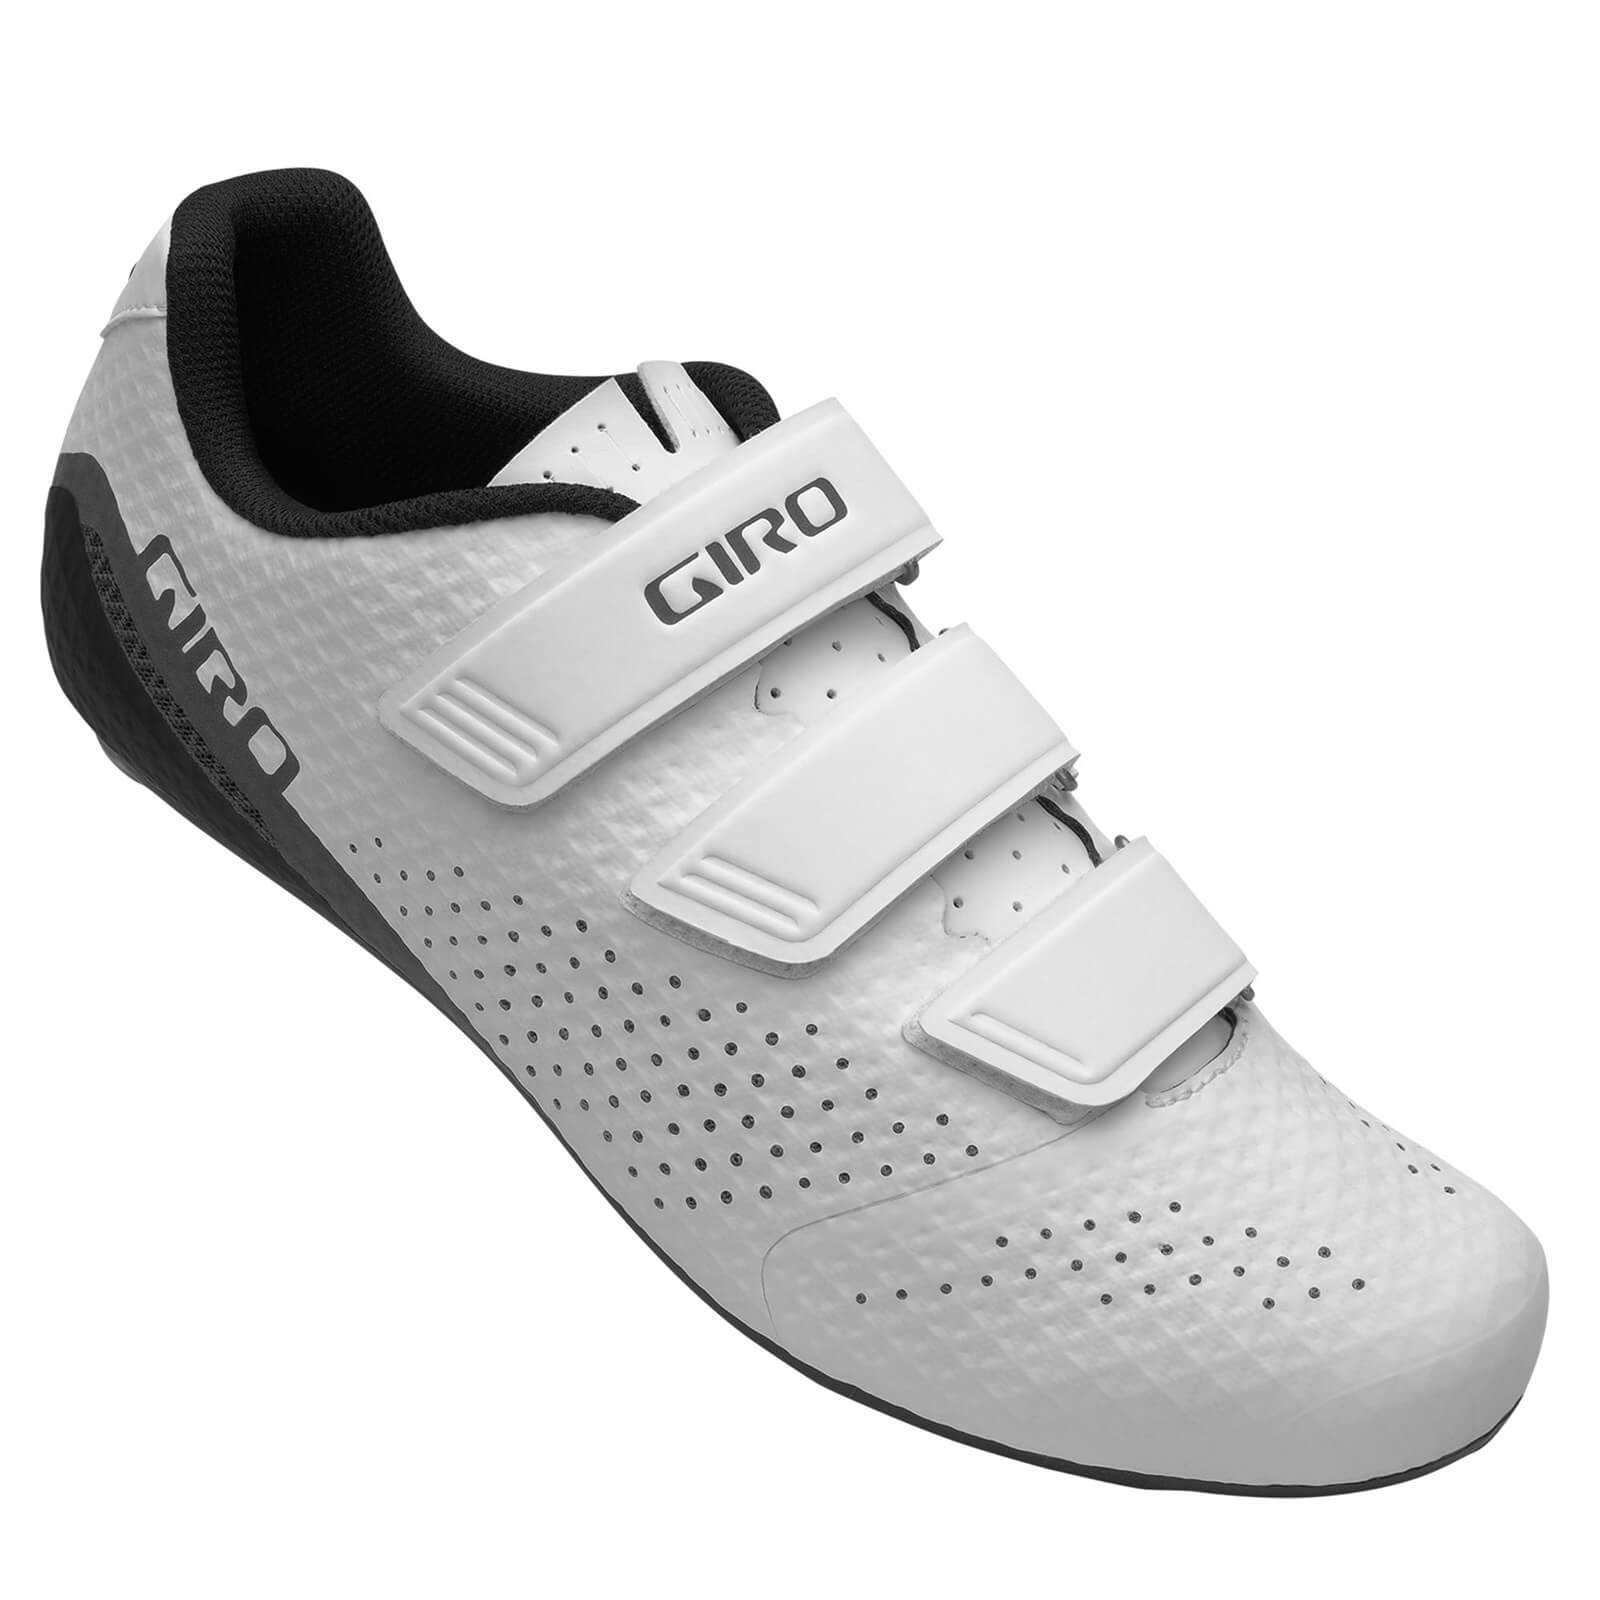 Giro Stylus Road Shoe - EU 46 - Weiß